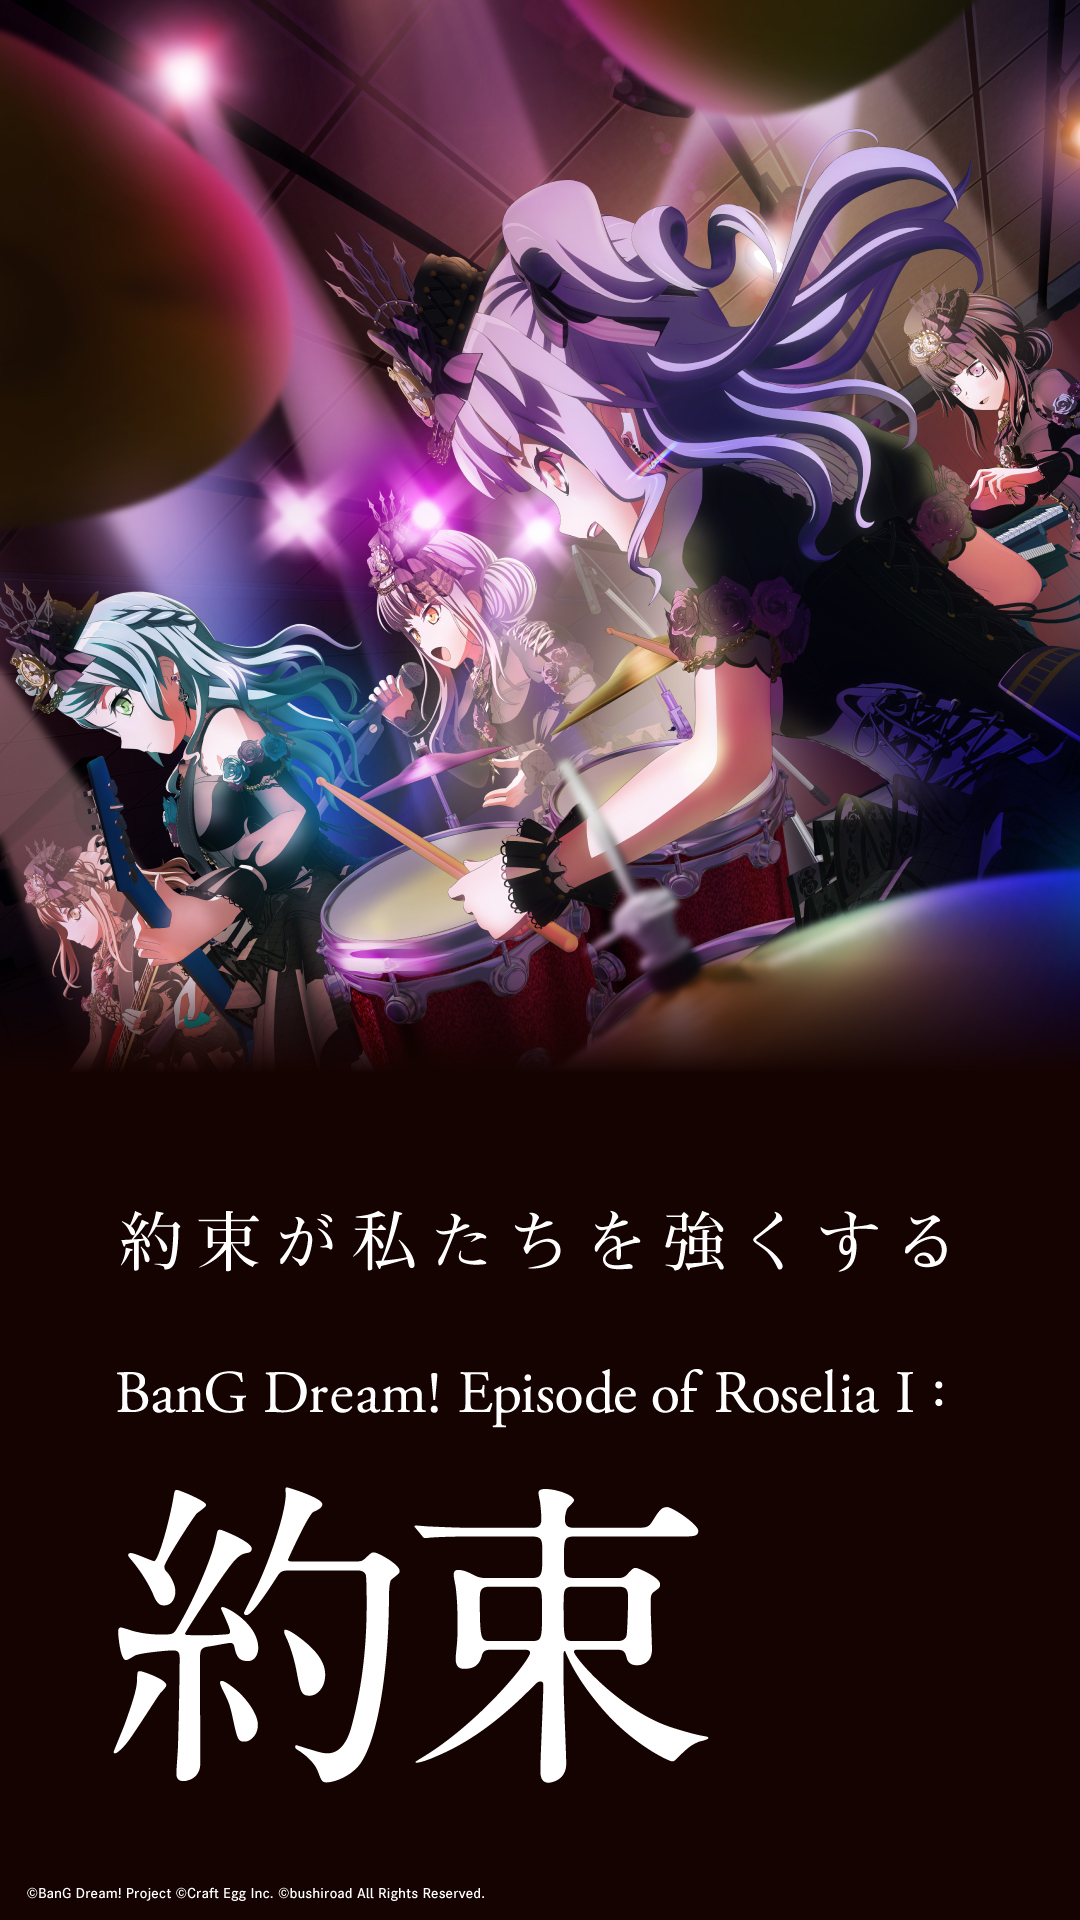 BanG-Dream-Episode-of-Roselia-I-Yakusoku-KV1 Bang Dream! Episode of Roselia - I: Yakusoku (Bang Dream! Episode of Roselia - I: Promise)